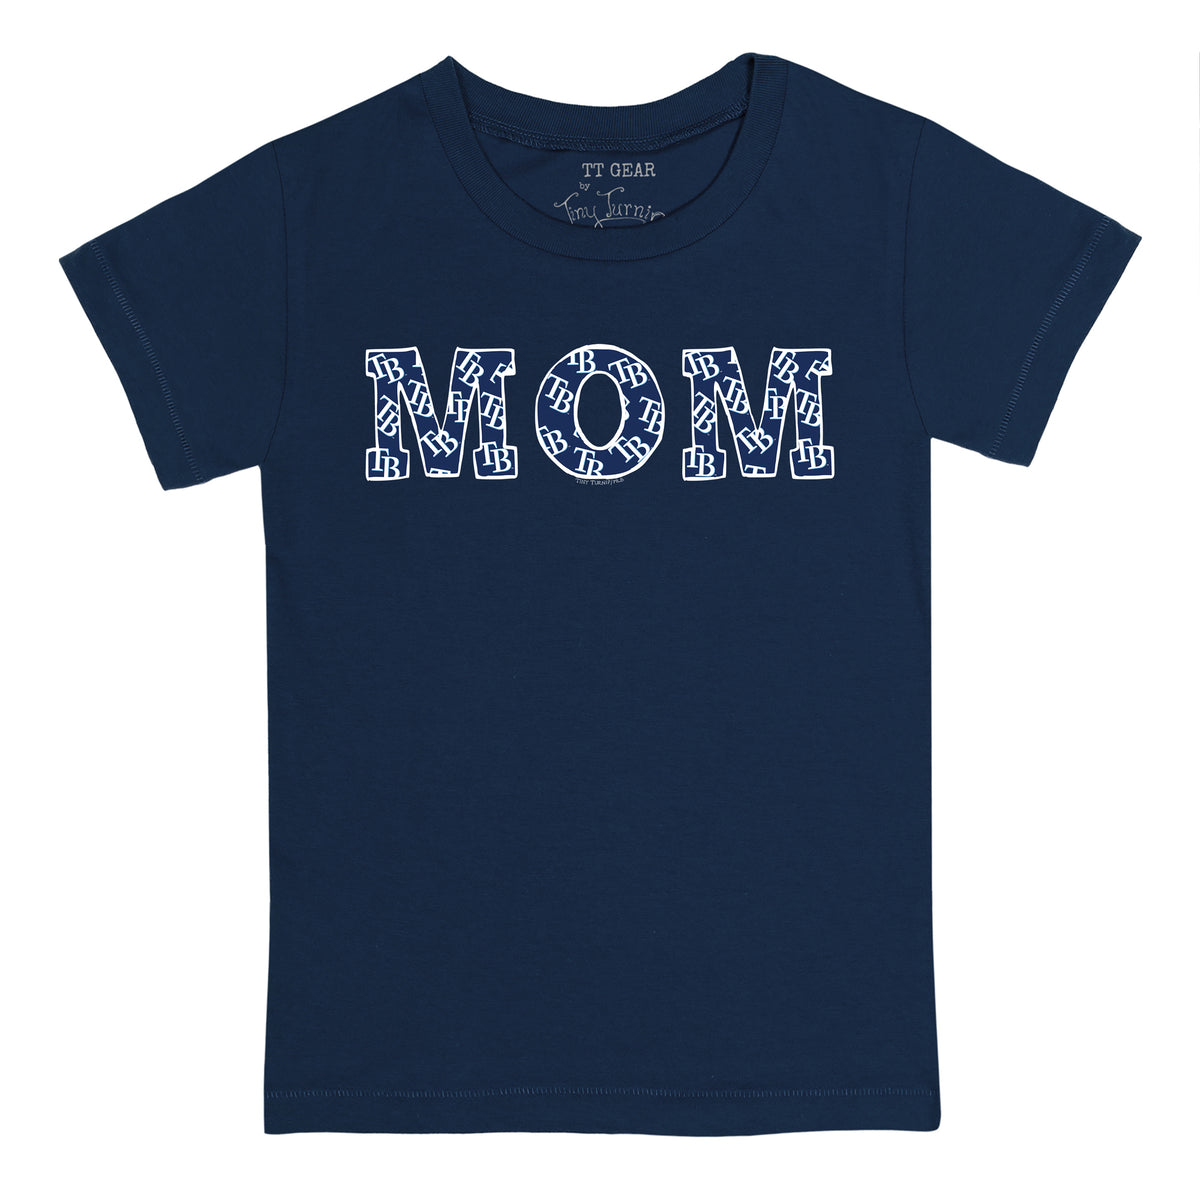 Tampa Bay Rays Mom Tee Shirt